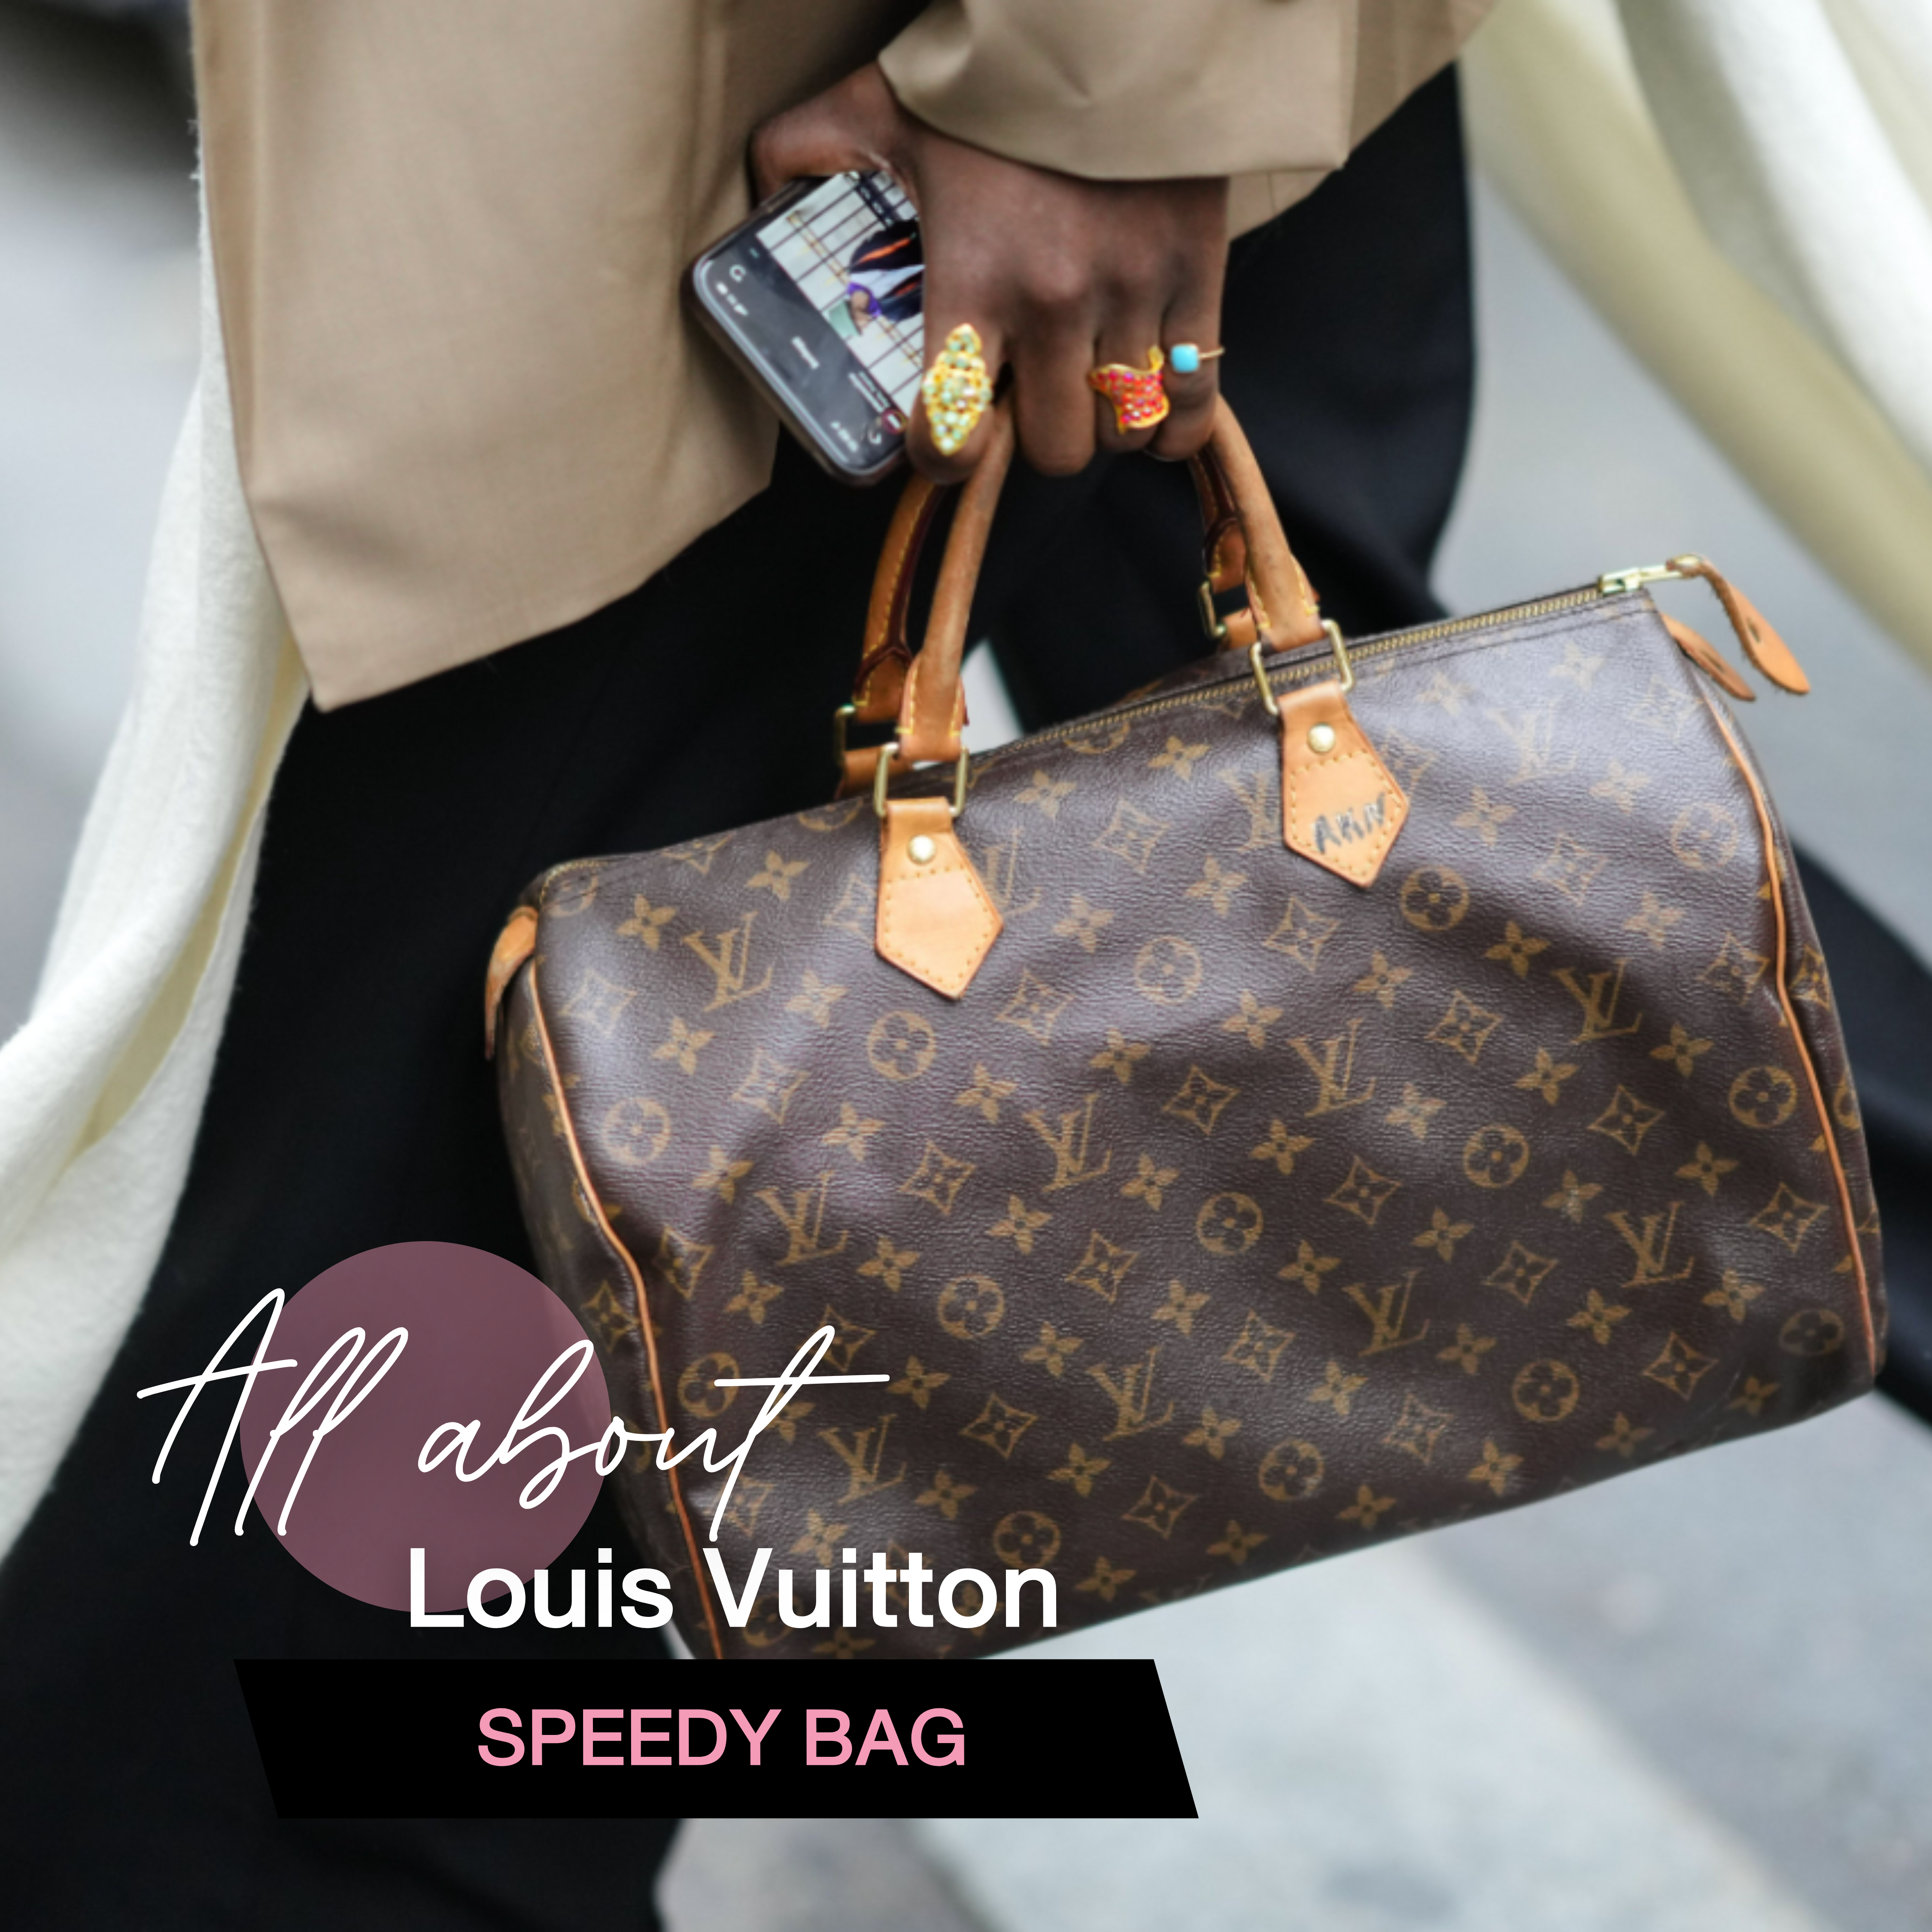 All About Louis Vuitton Speedy Bag